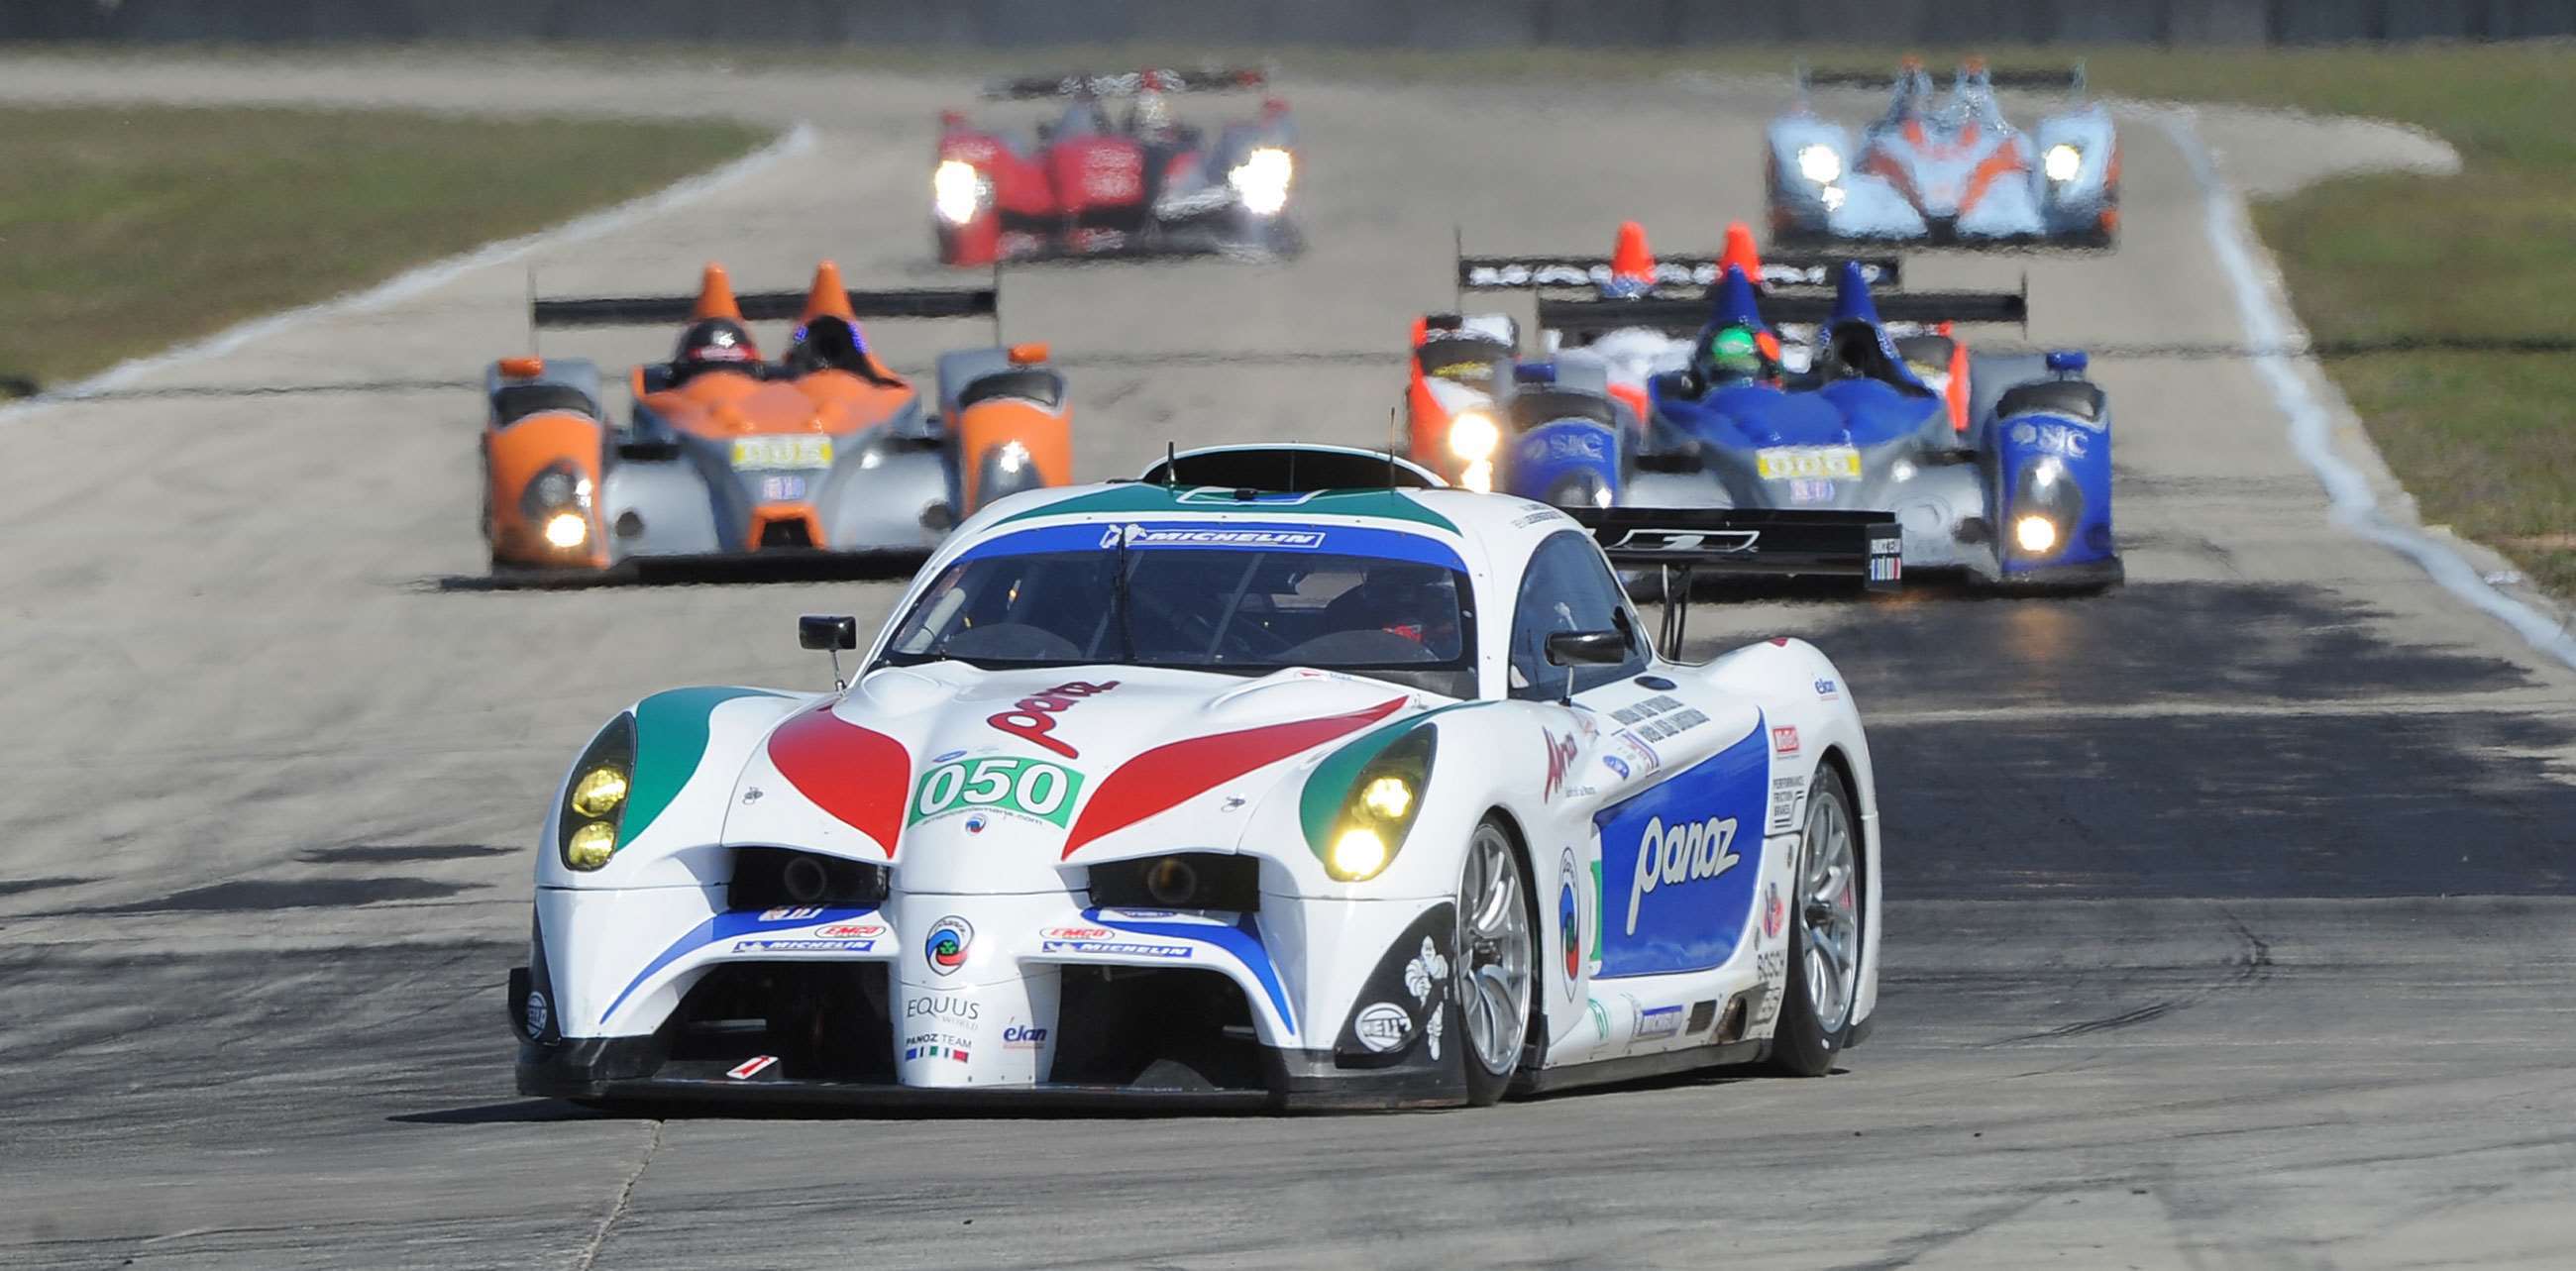 ugliest-racing-cars-3-panoz-abruzzi-sebring-2011-mi-goodwood-29062020.jpg